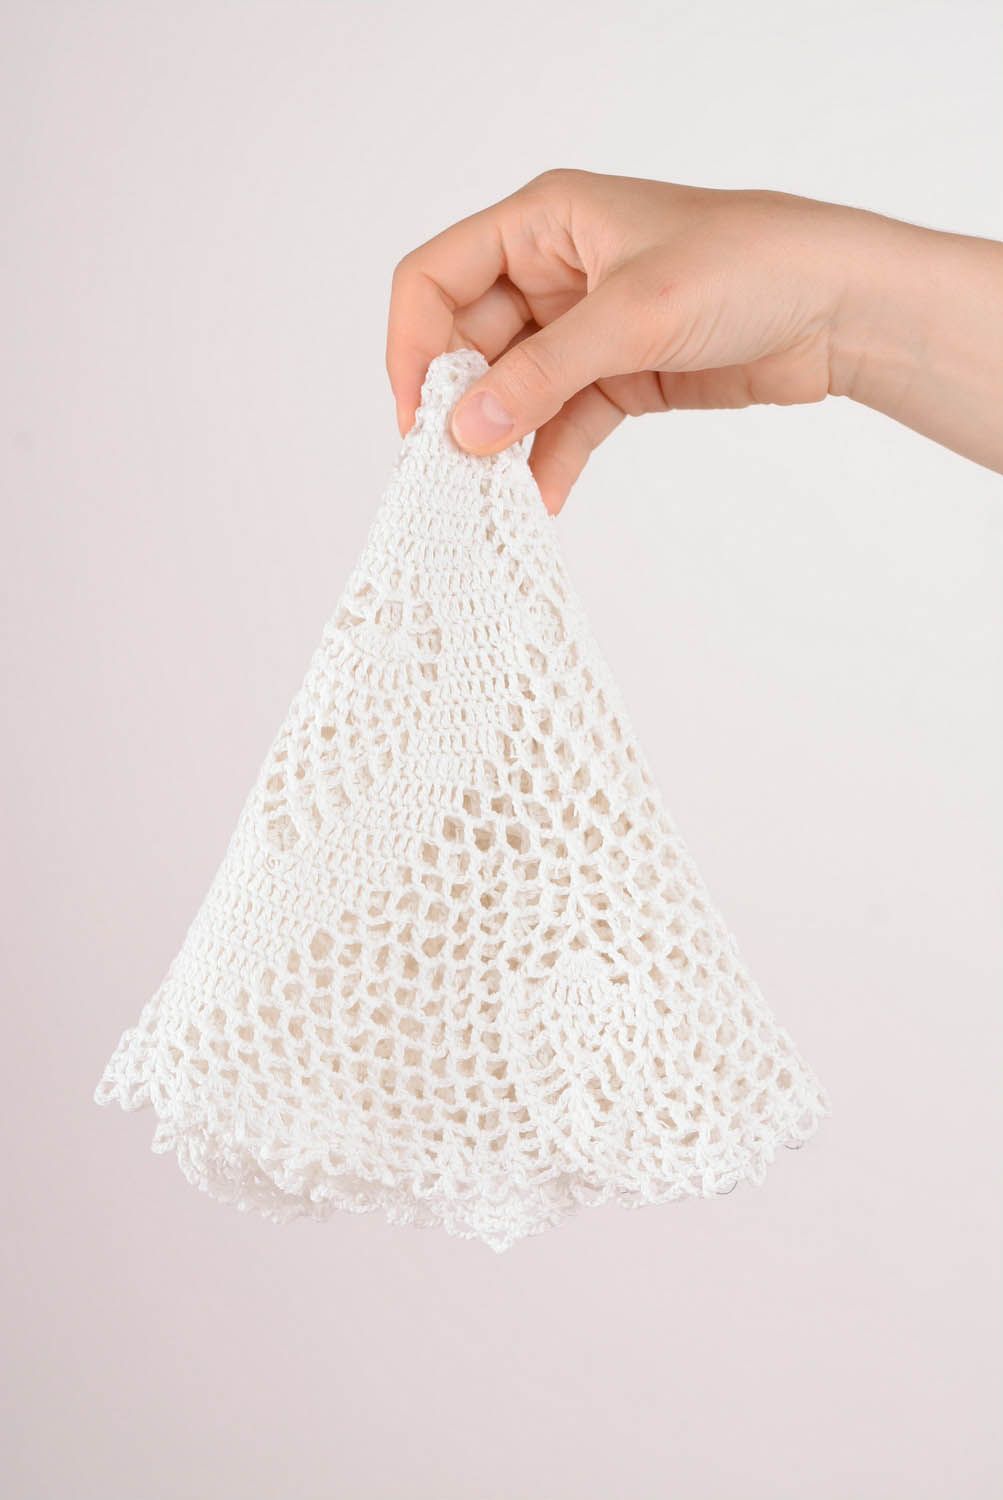 Knitted cotton napkin photo 1